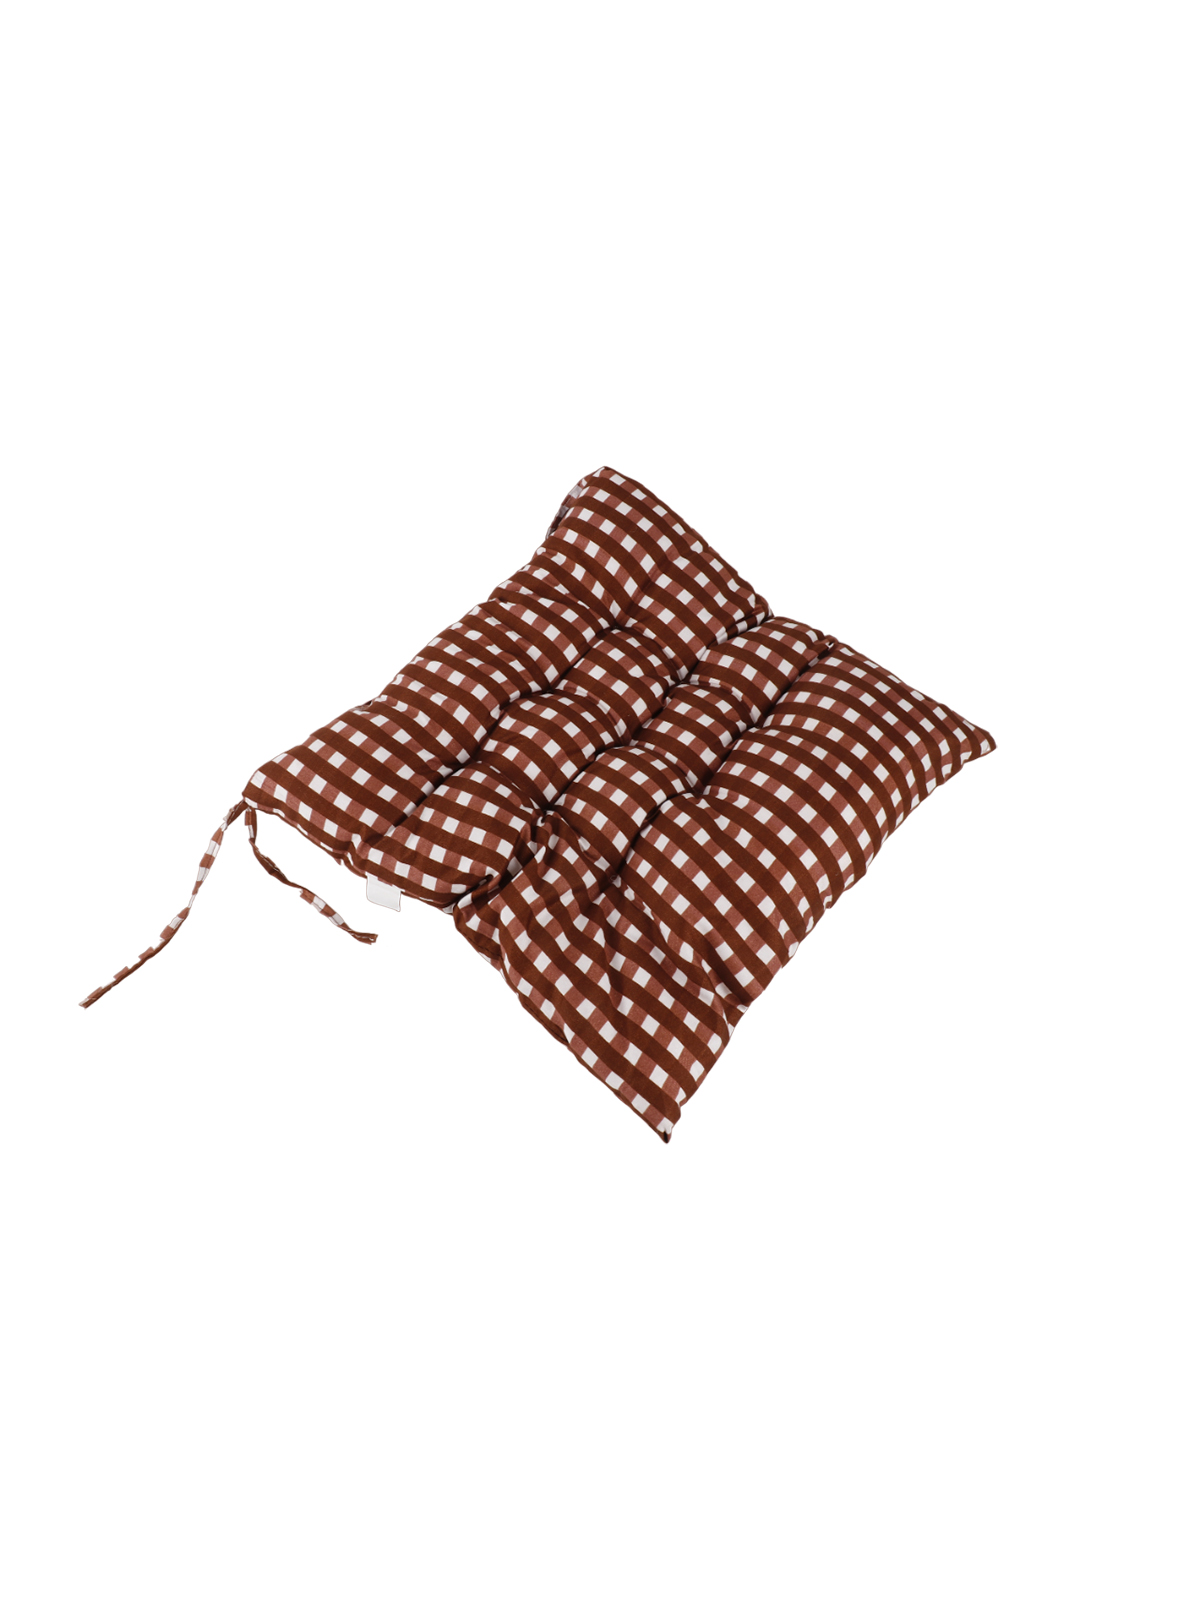 Подушка на стул с завязками "Мягкая", 39*39 см